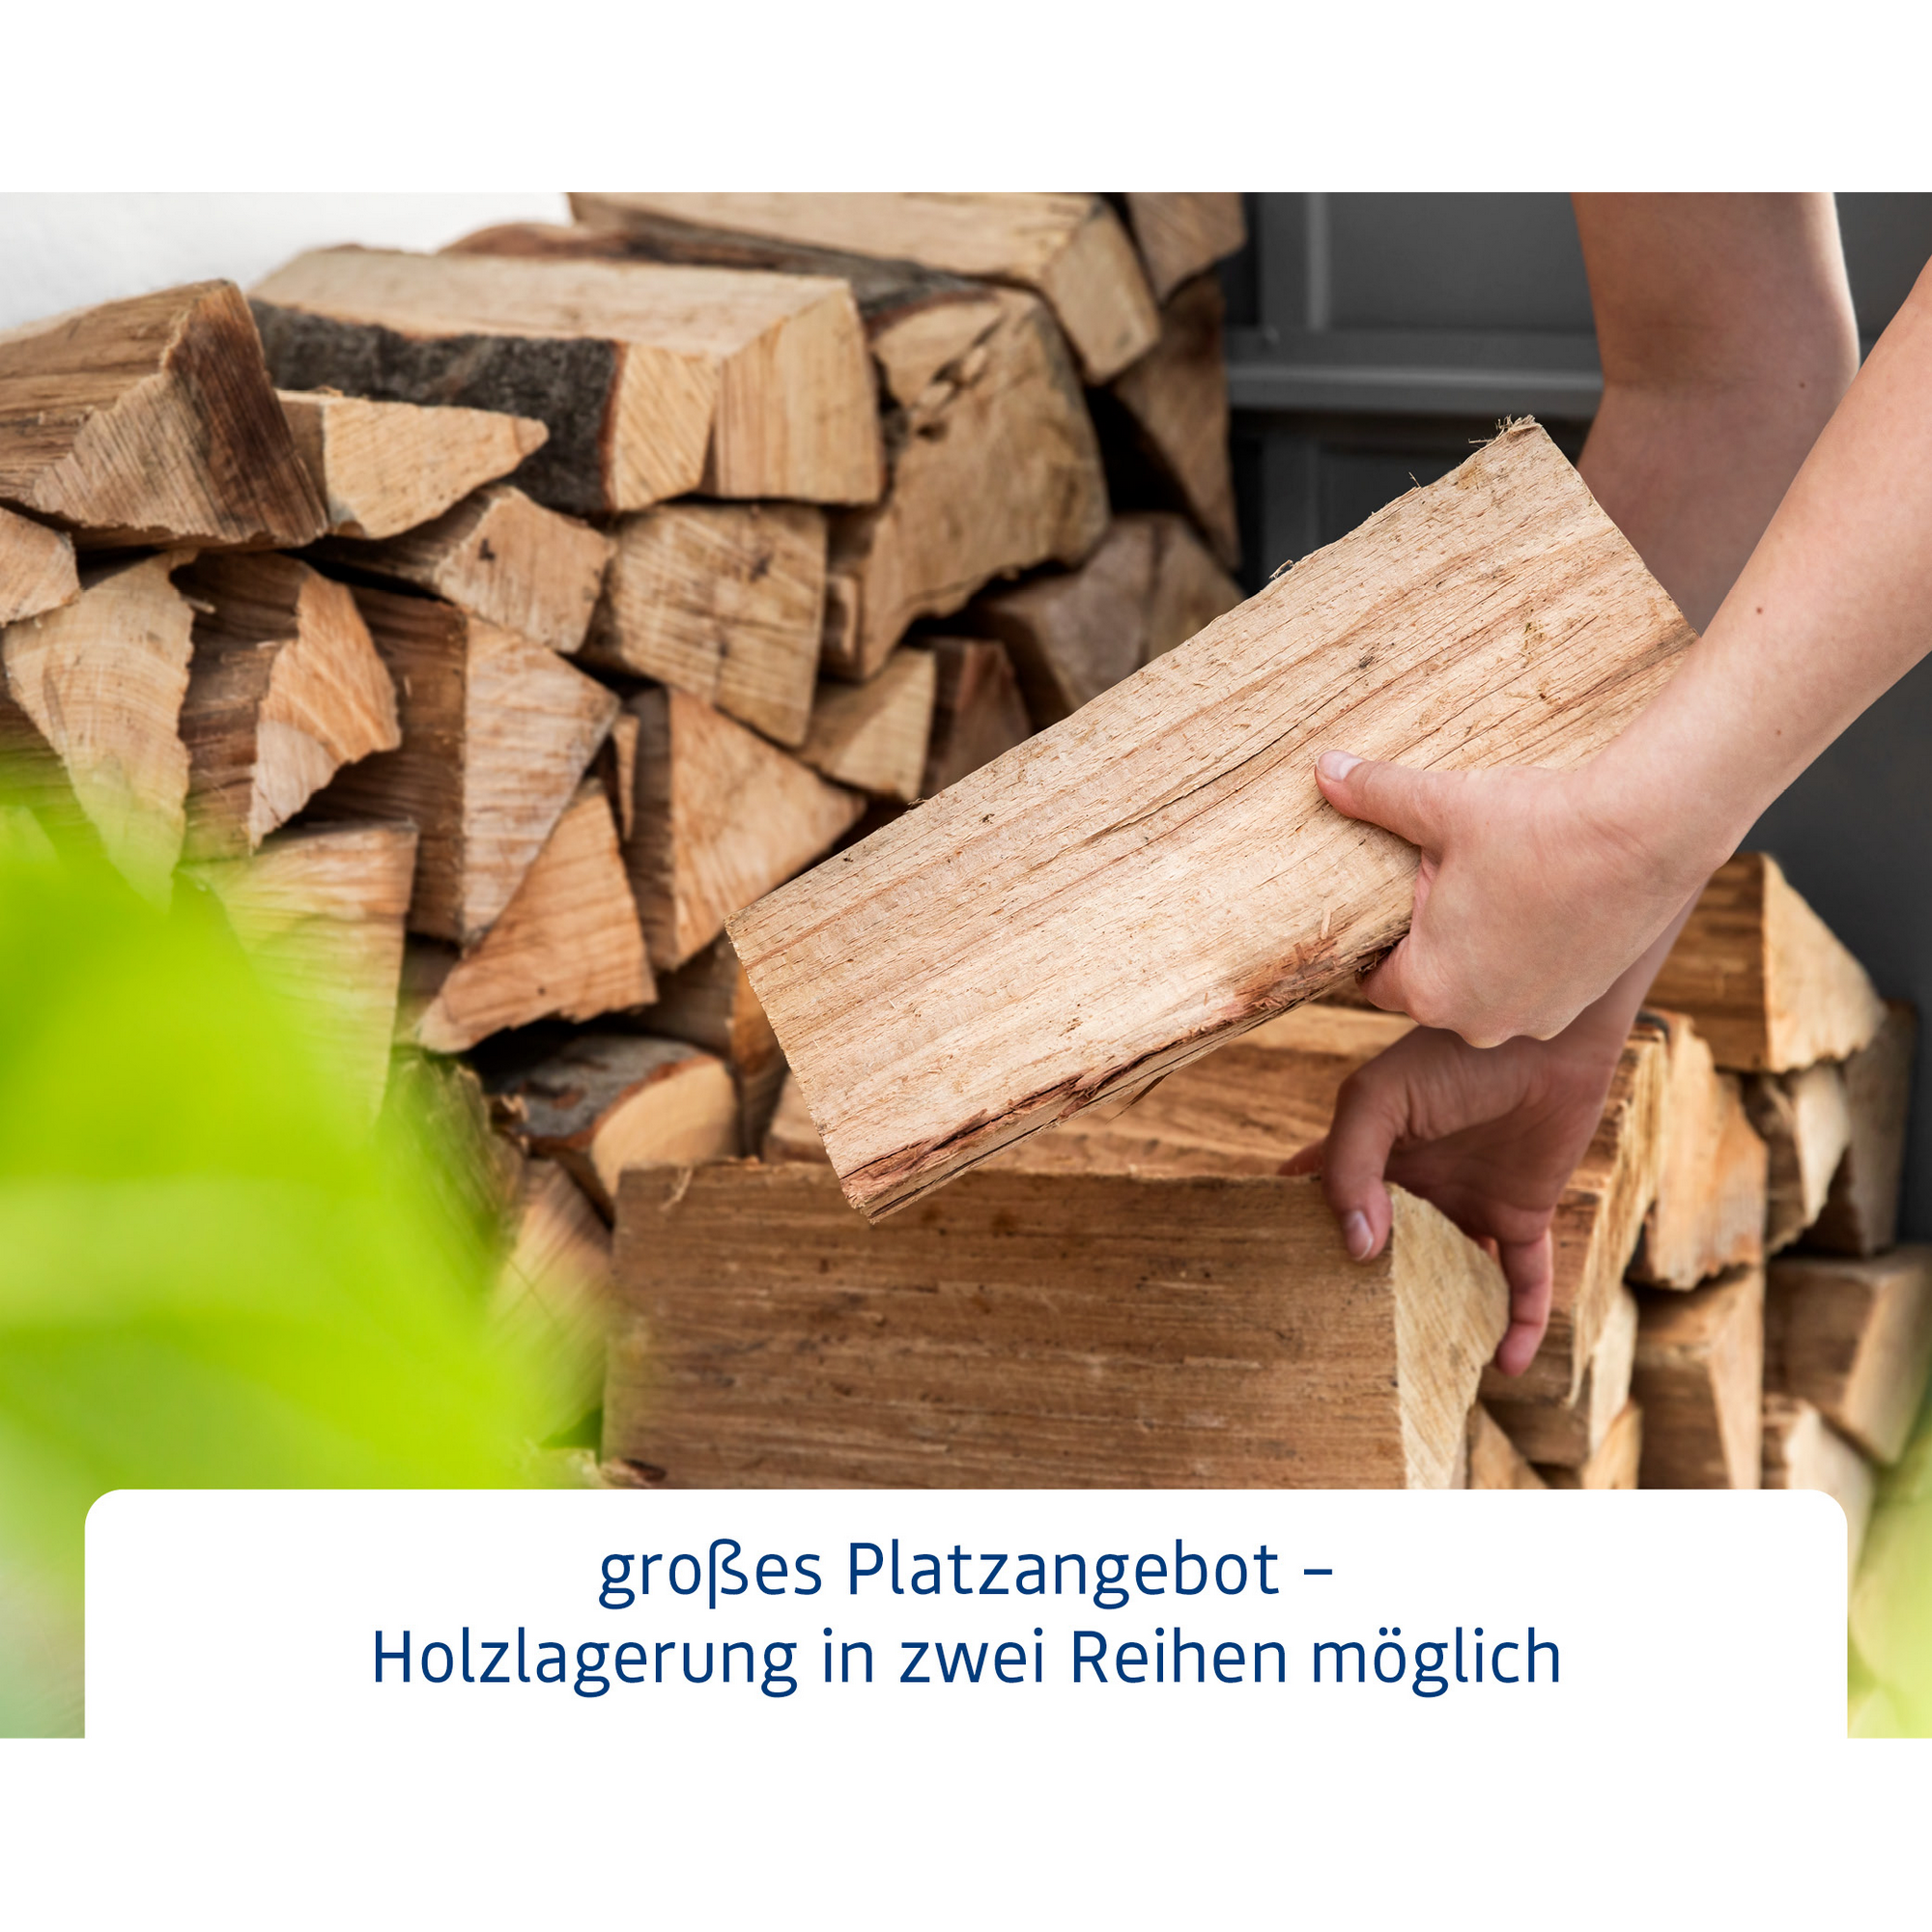 Kaminholzregal 'Trend Typ 2' moosgrün 102,5 x 181,4 x 198 cm + product picture